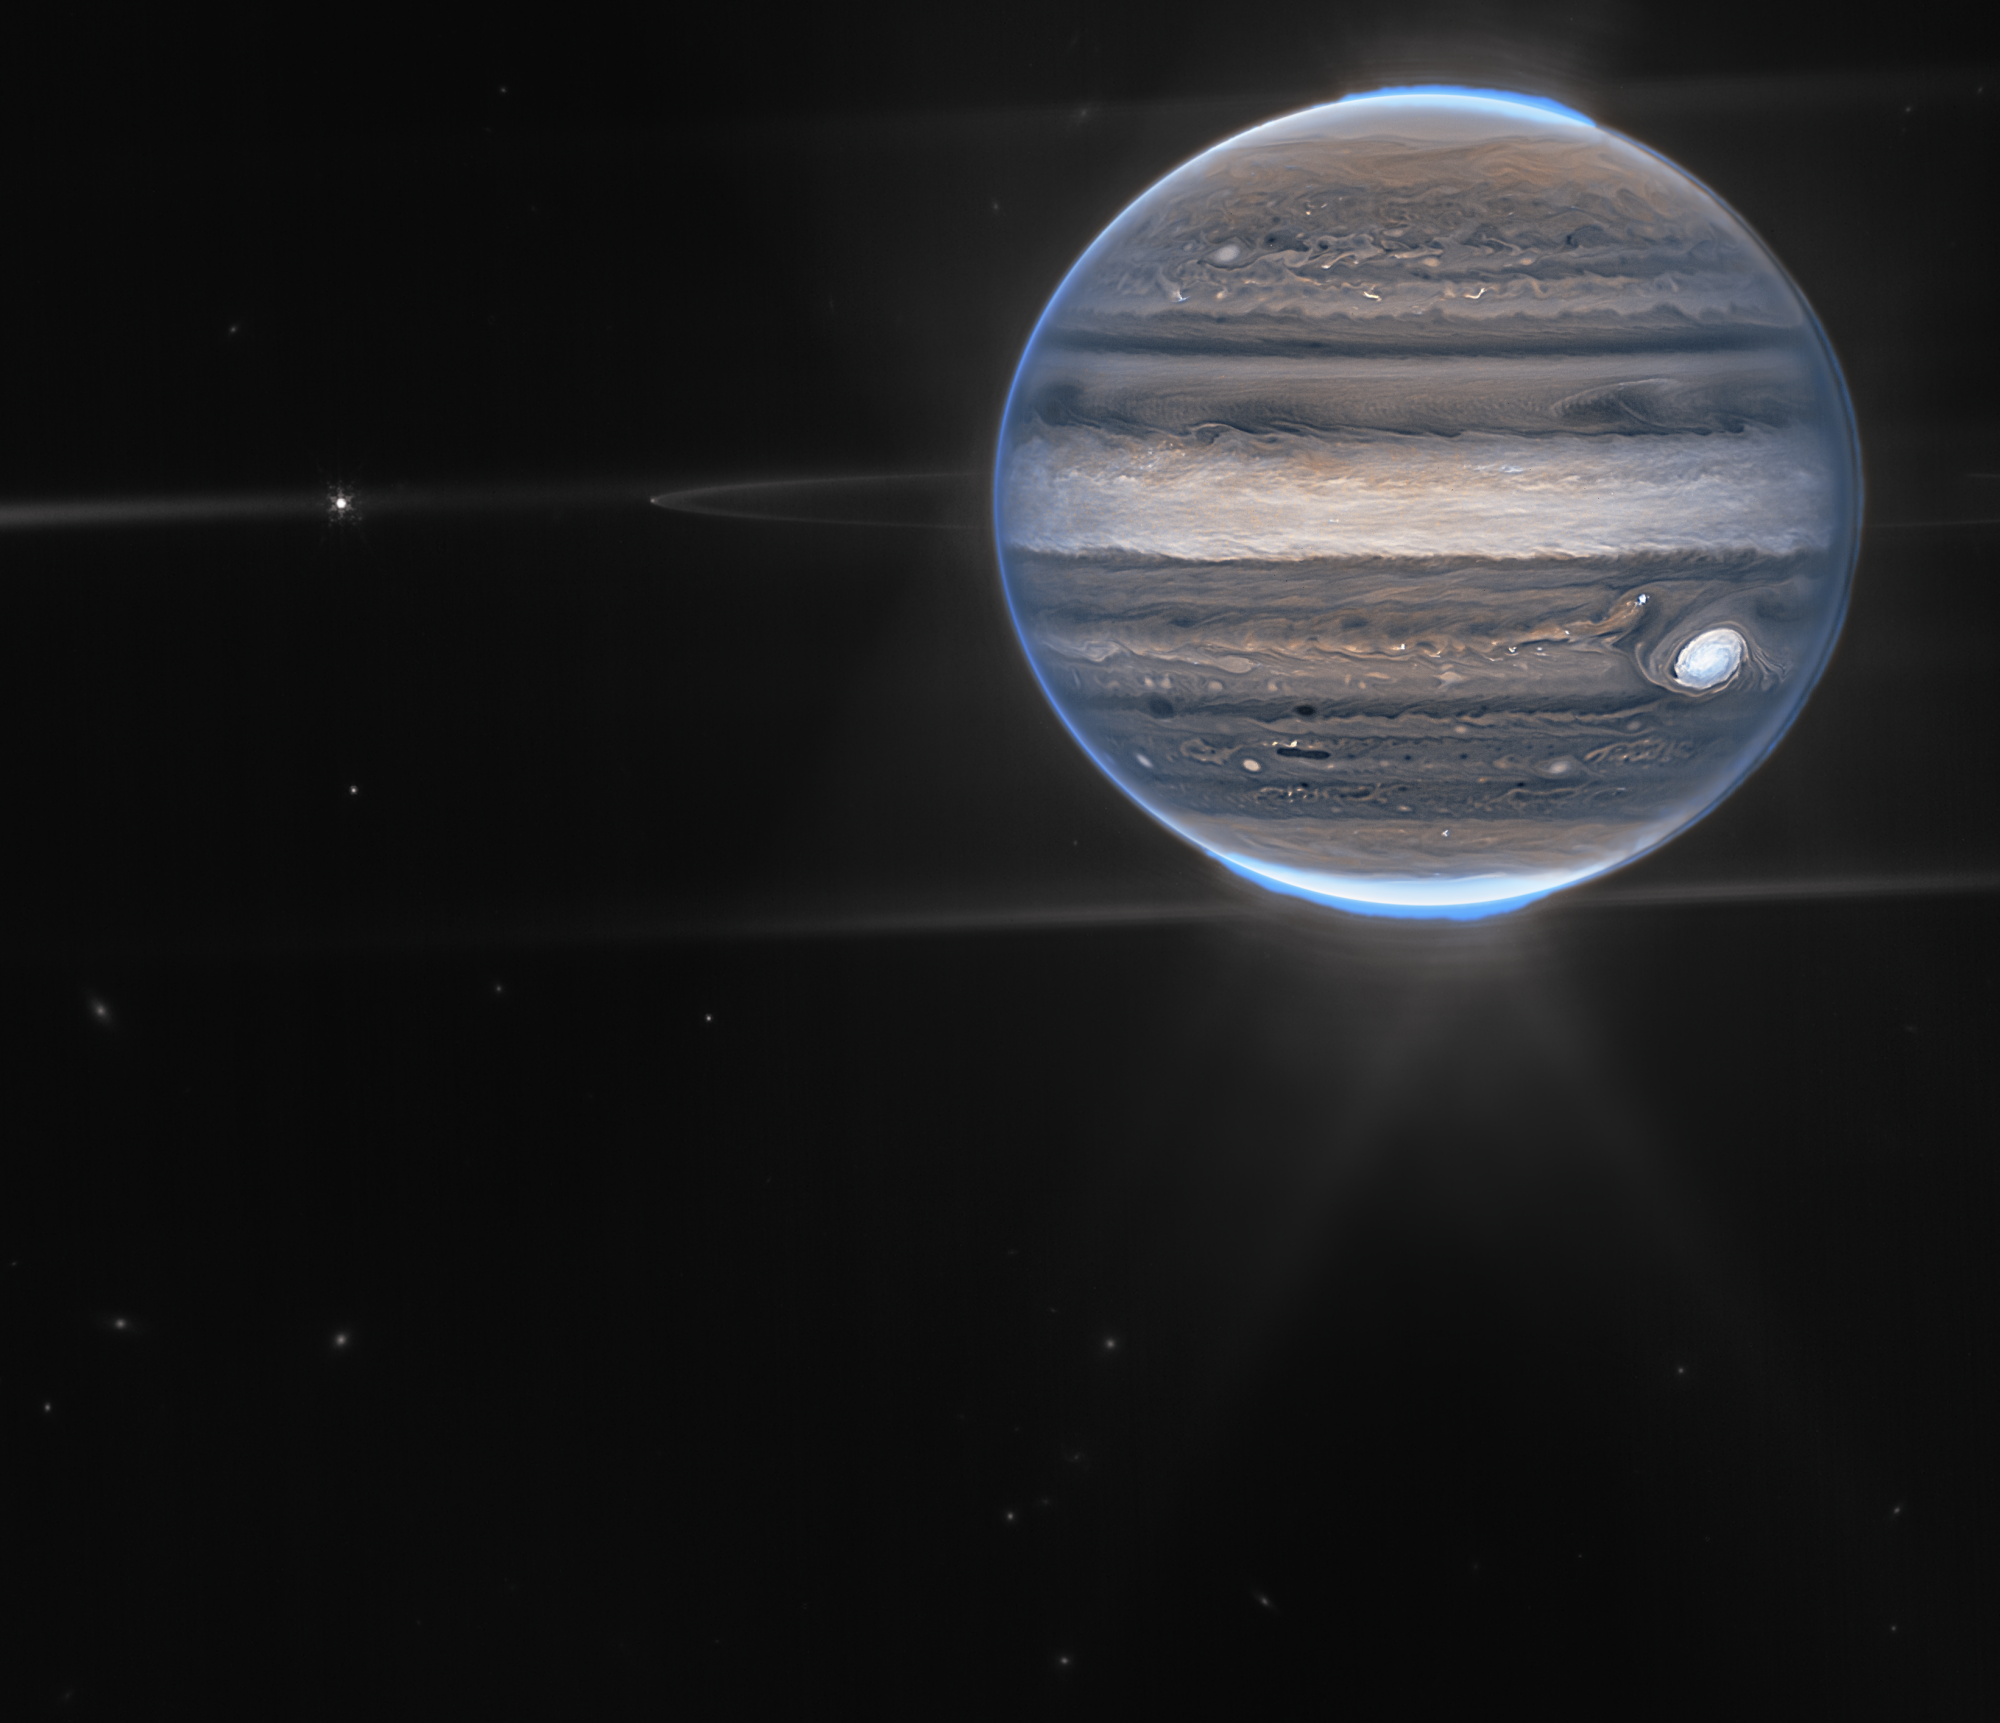 Jupiter and its surroundings